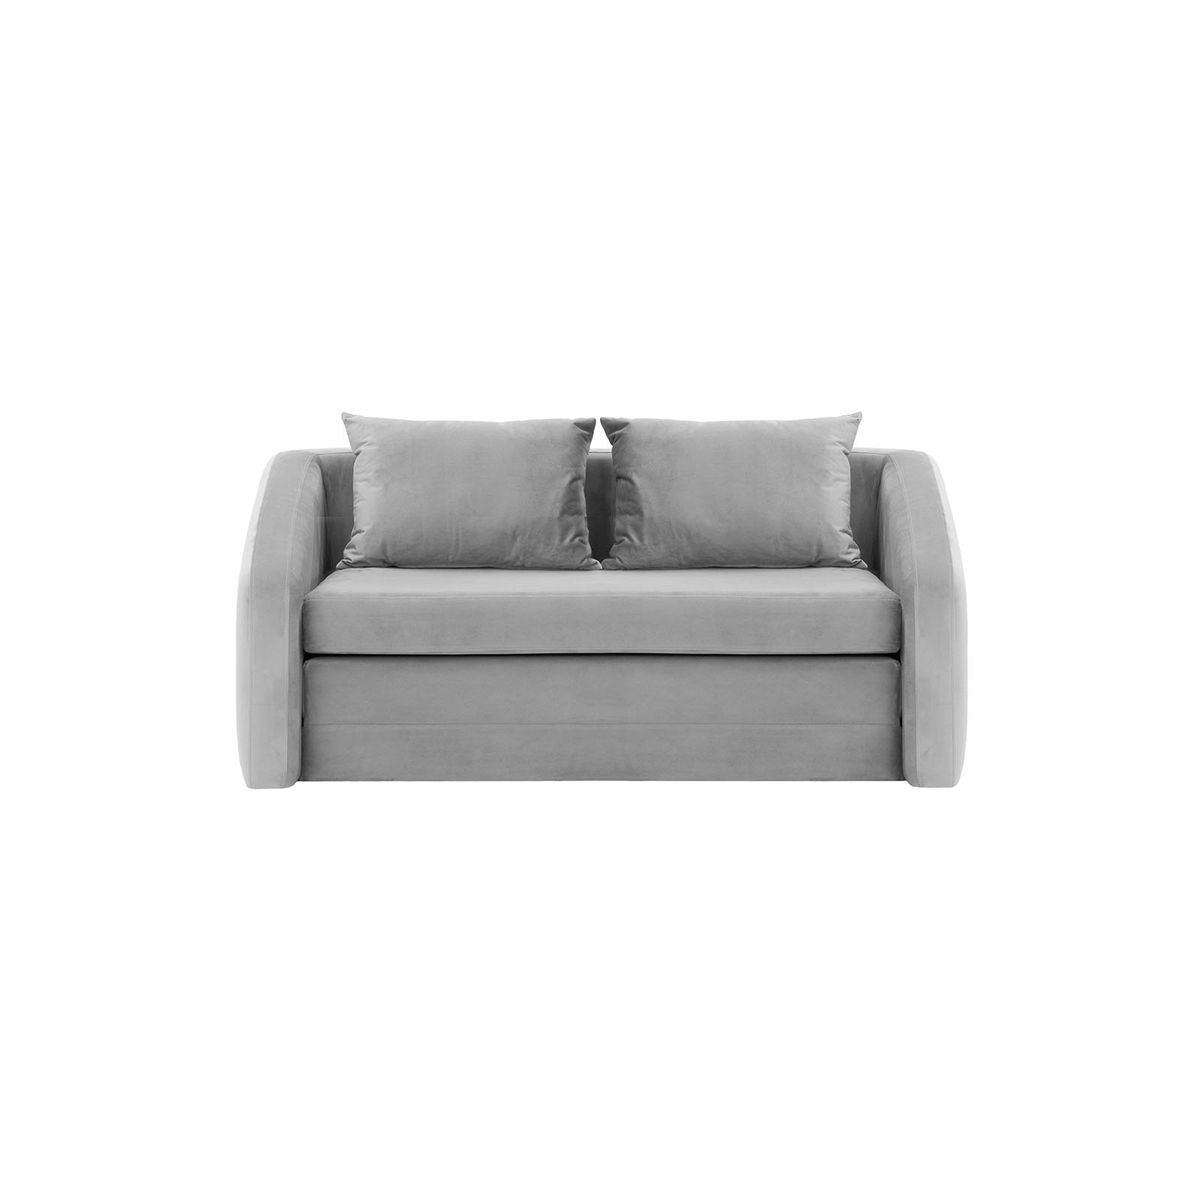 Alma 2.5 Seater Sofa Bed, silver - image 1